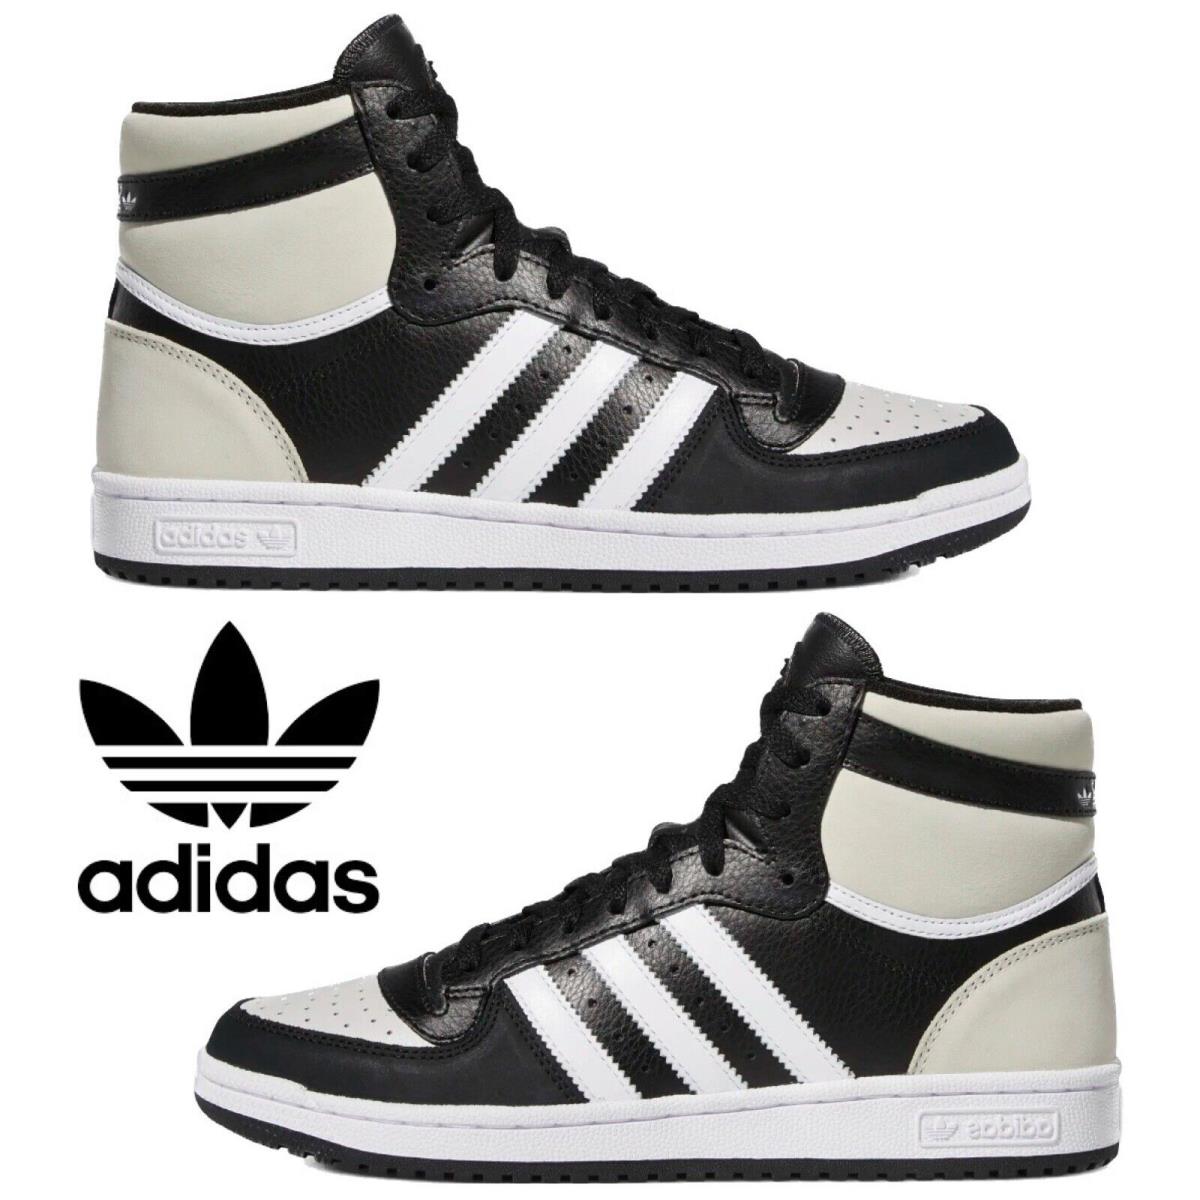 Adidas Originals Top Ten RB Men`s Sneakers Comfort Casual Shoes High Top Black